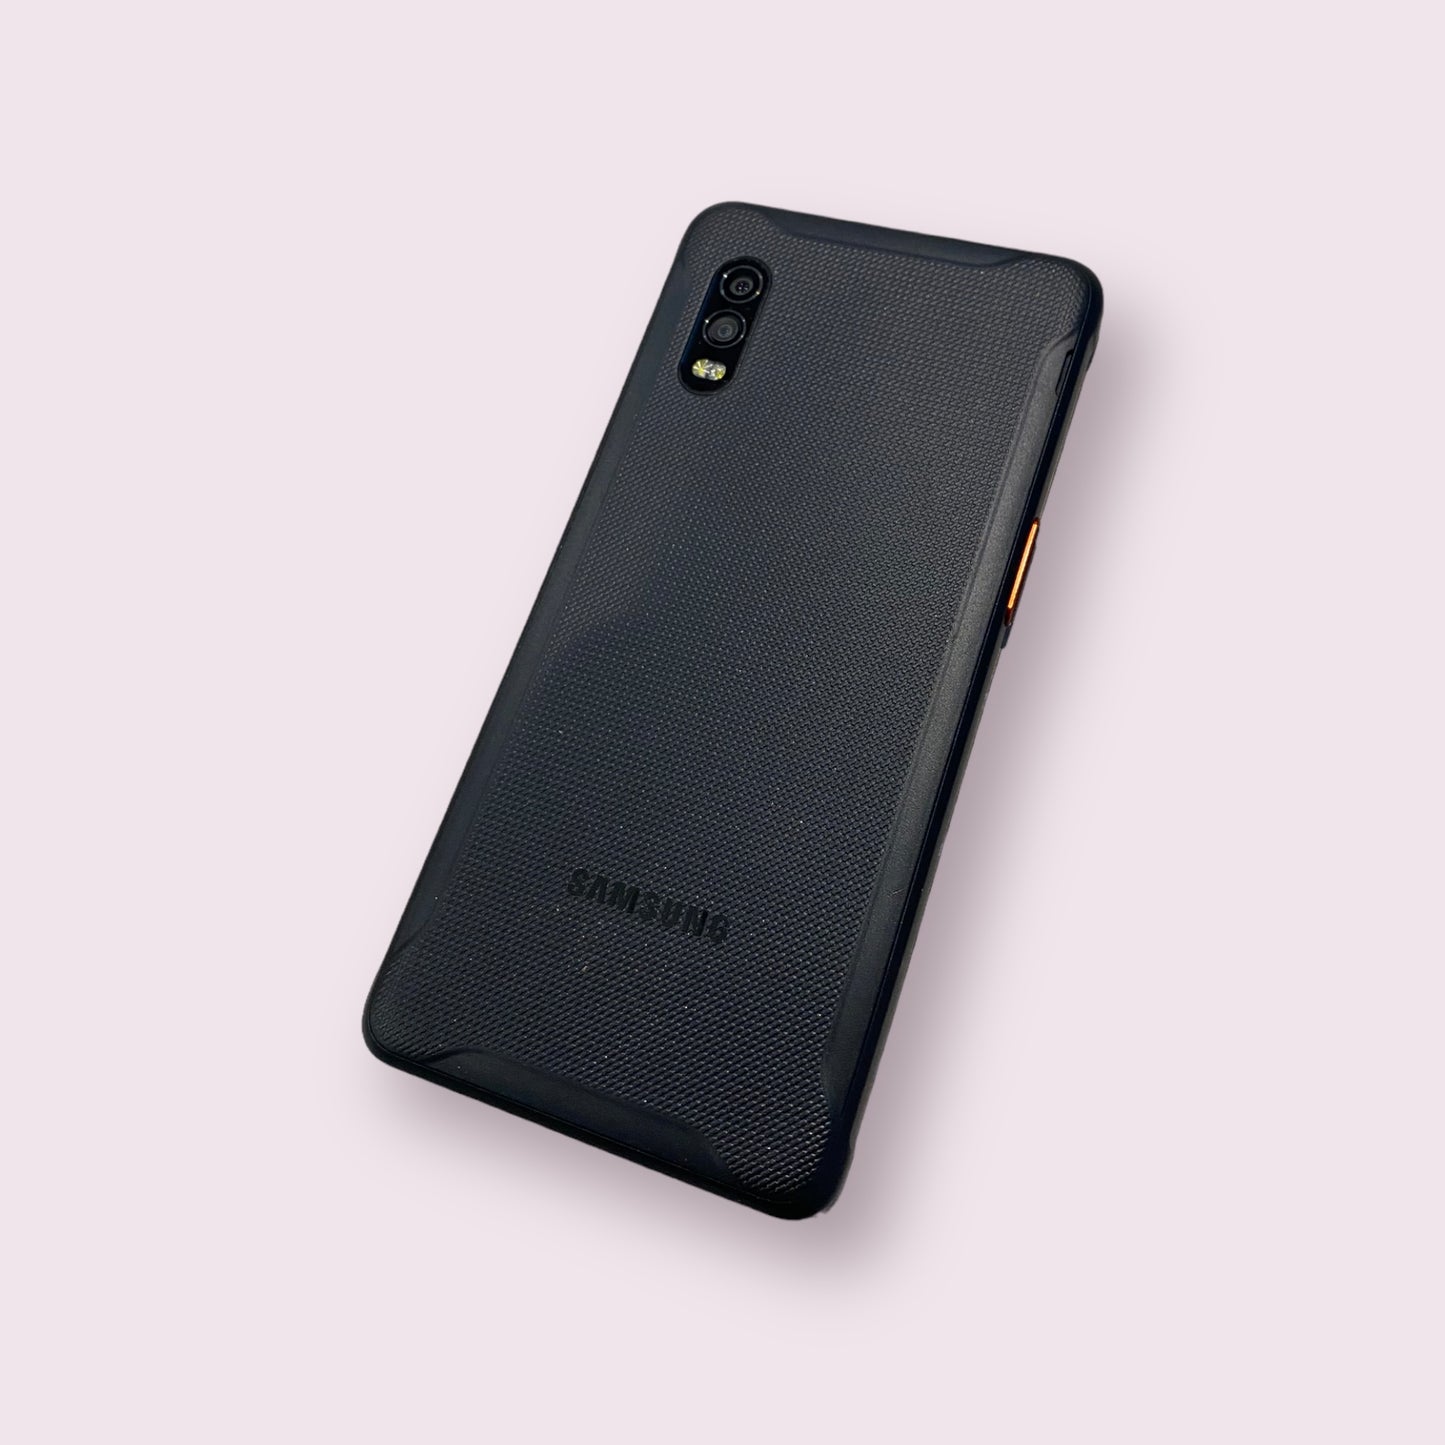 Samsung Galaxy Xcover pro SM-G715FN/DS 64GB black smartphone - Unlocked - Grade A